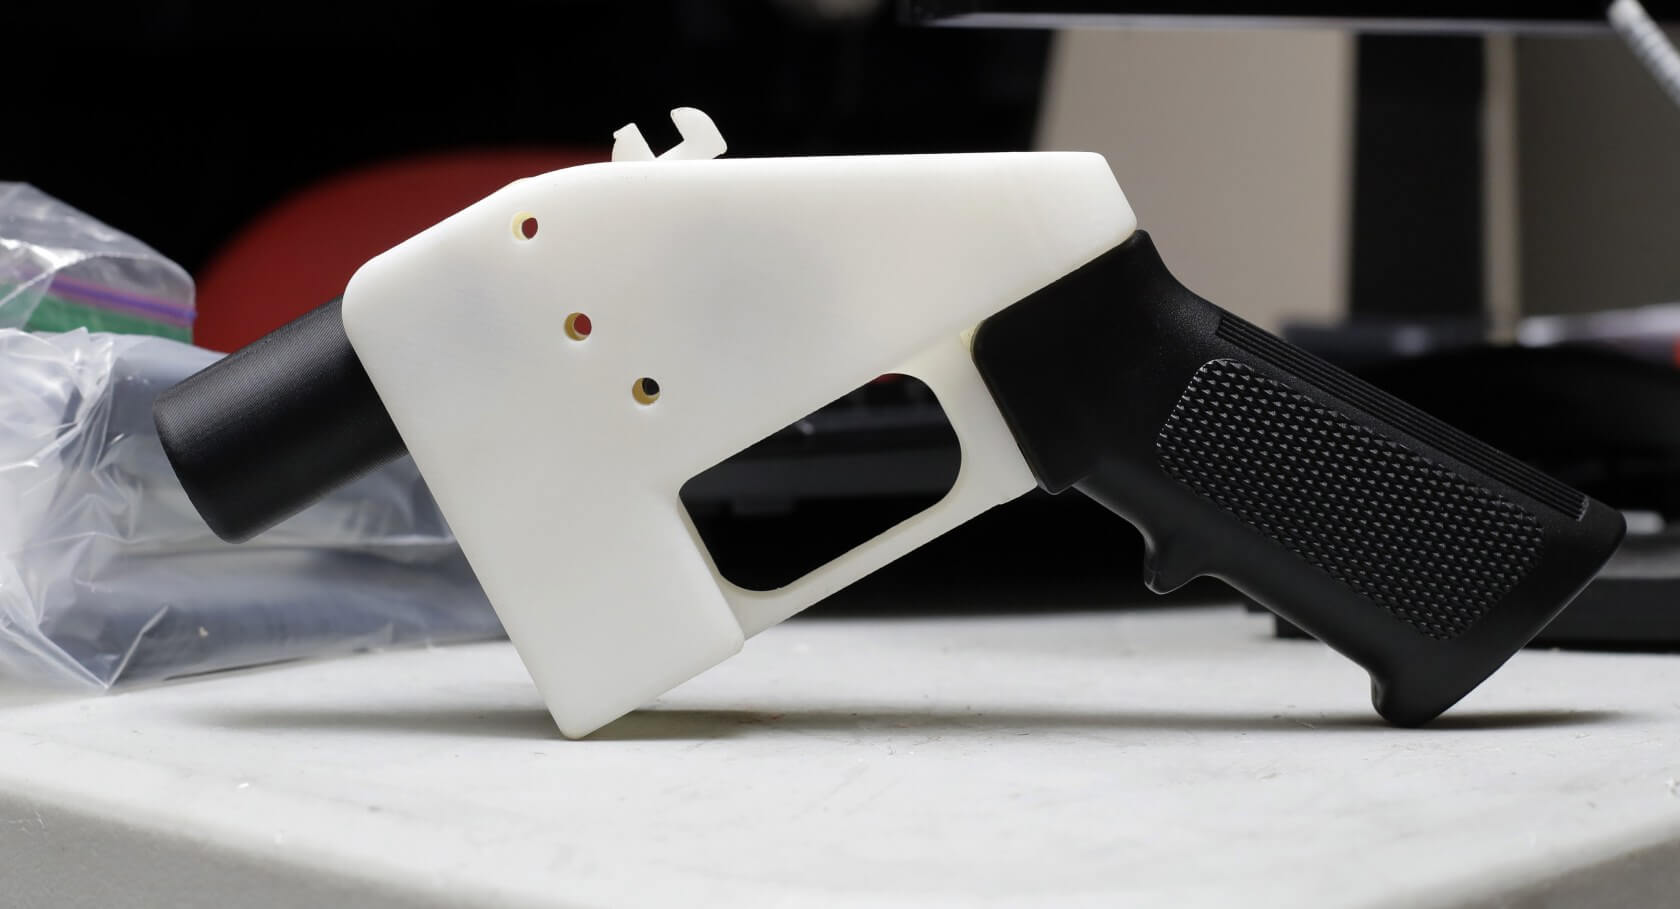 Judge rules to extend injunction against 3Dprinted gun designs TechSpot